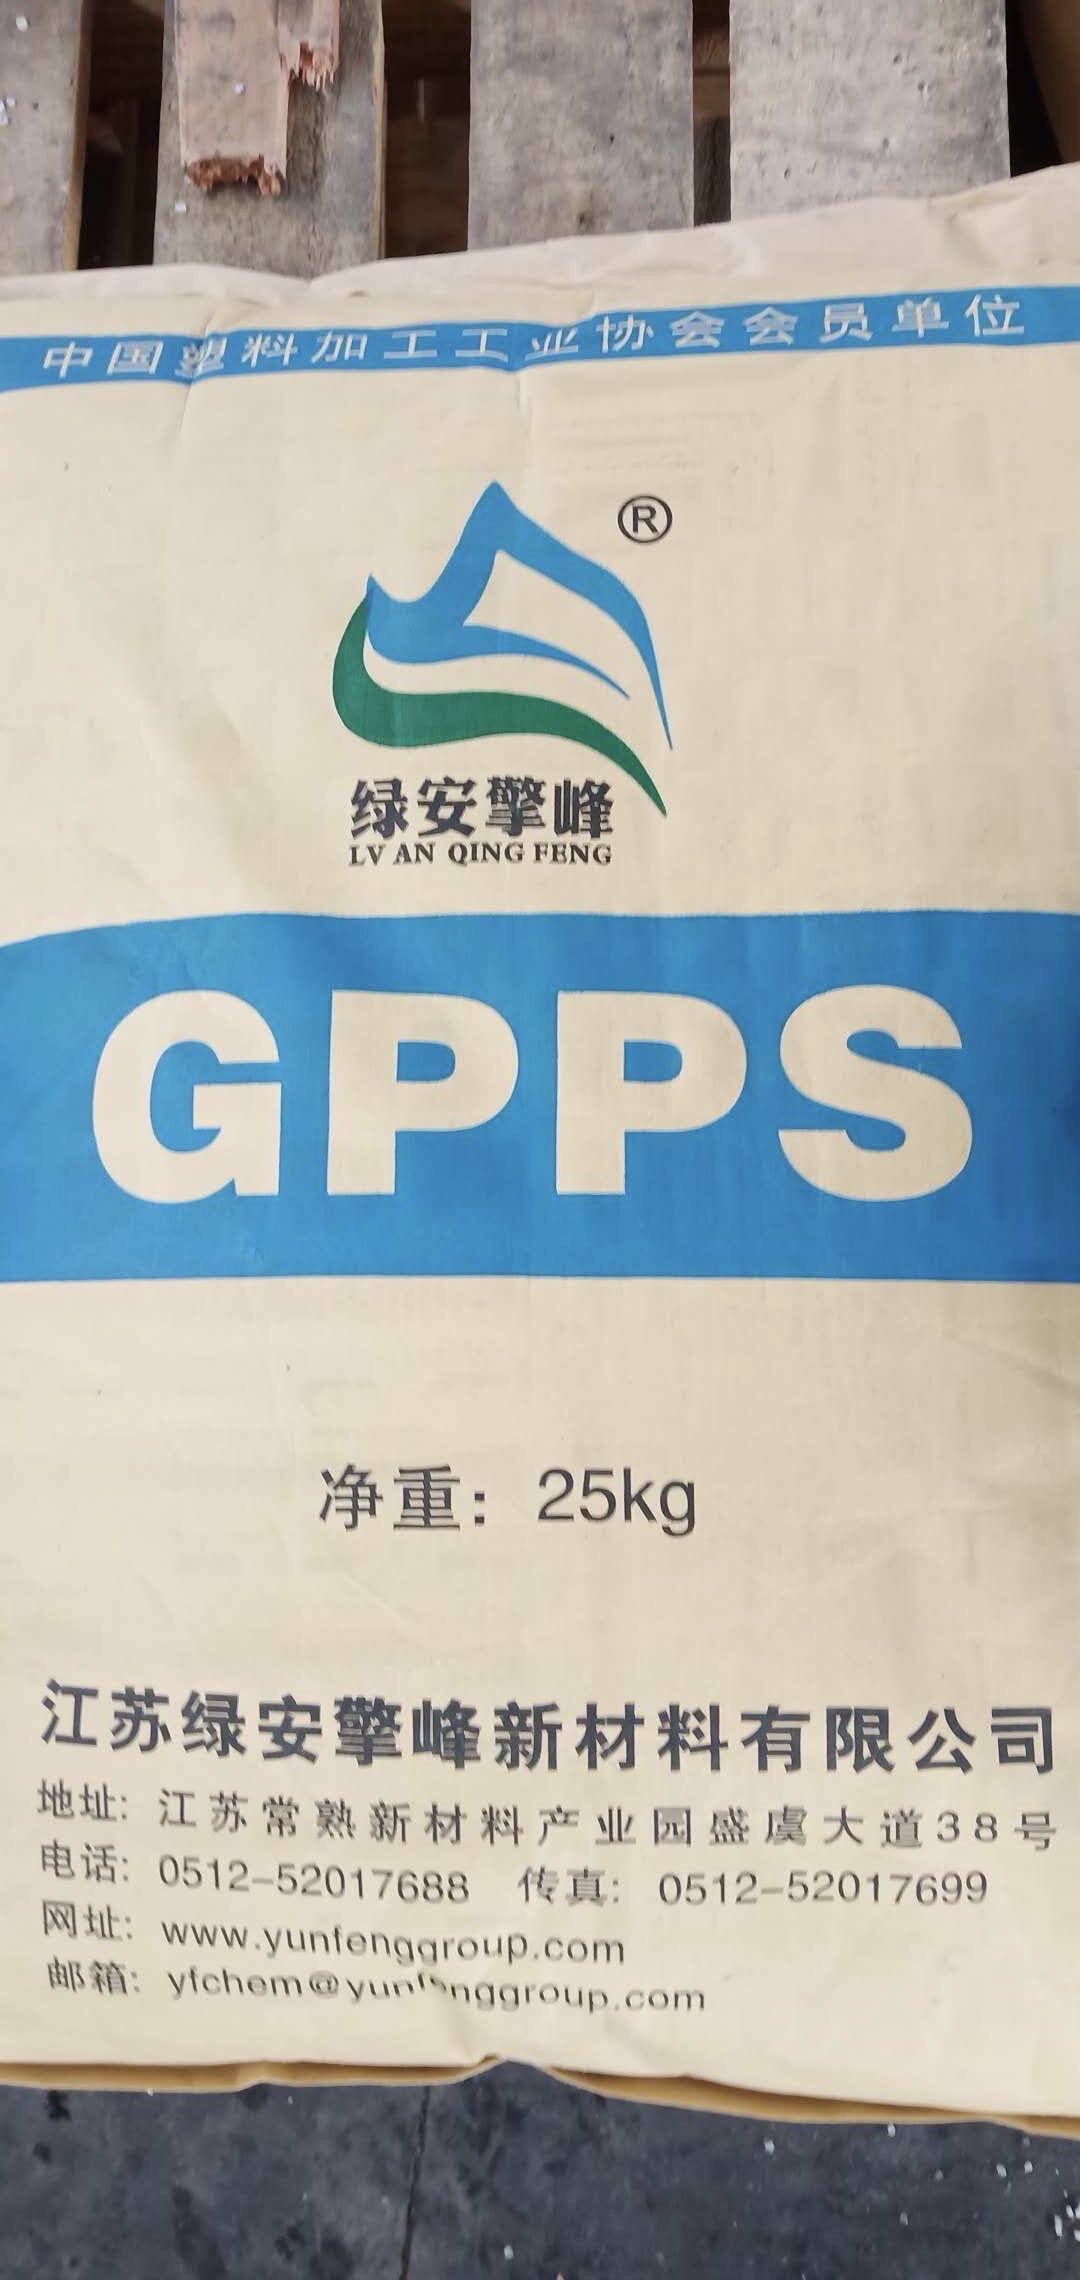 GPPS 绿安擎峰 GP-525 透明级4